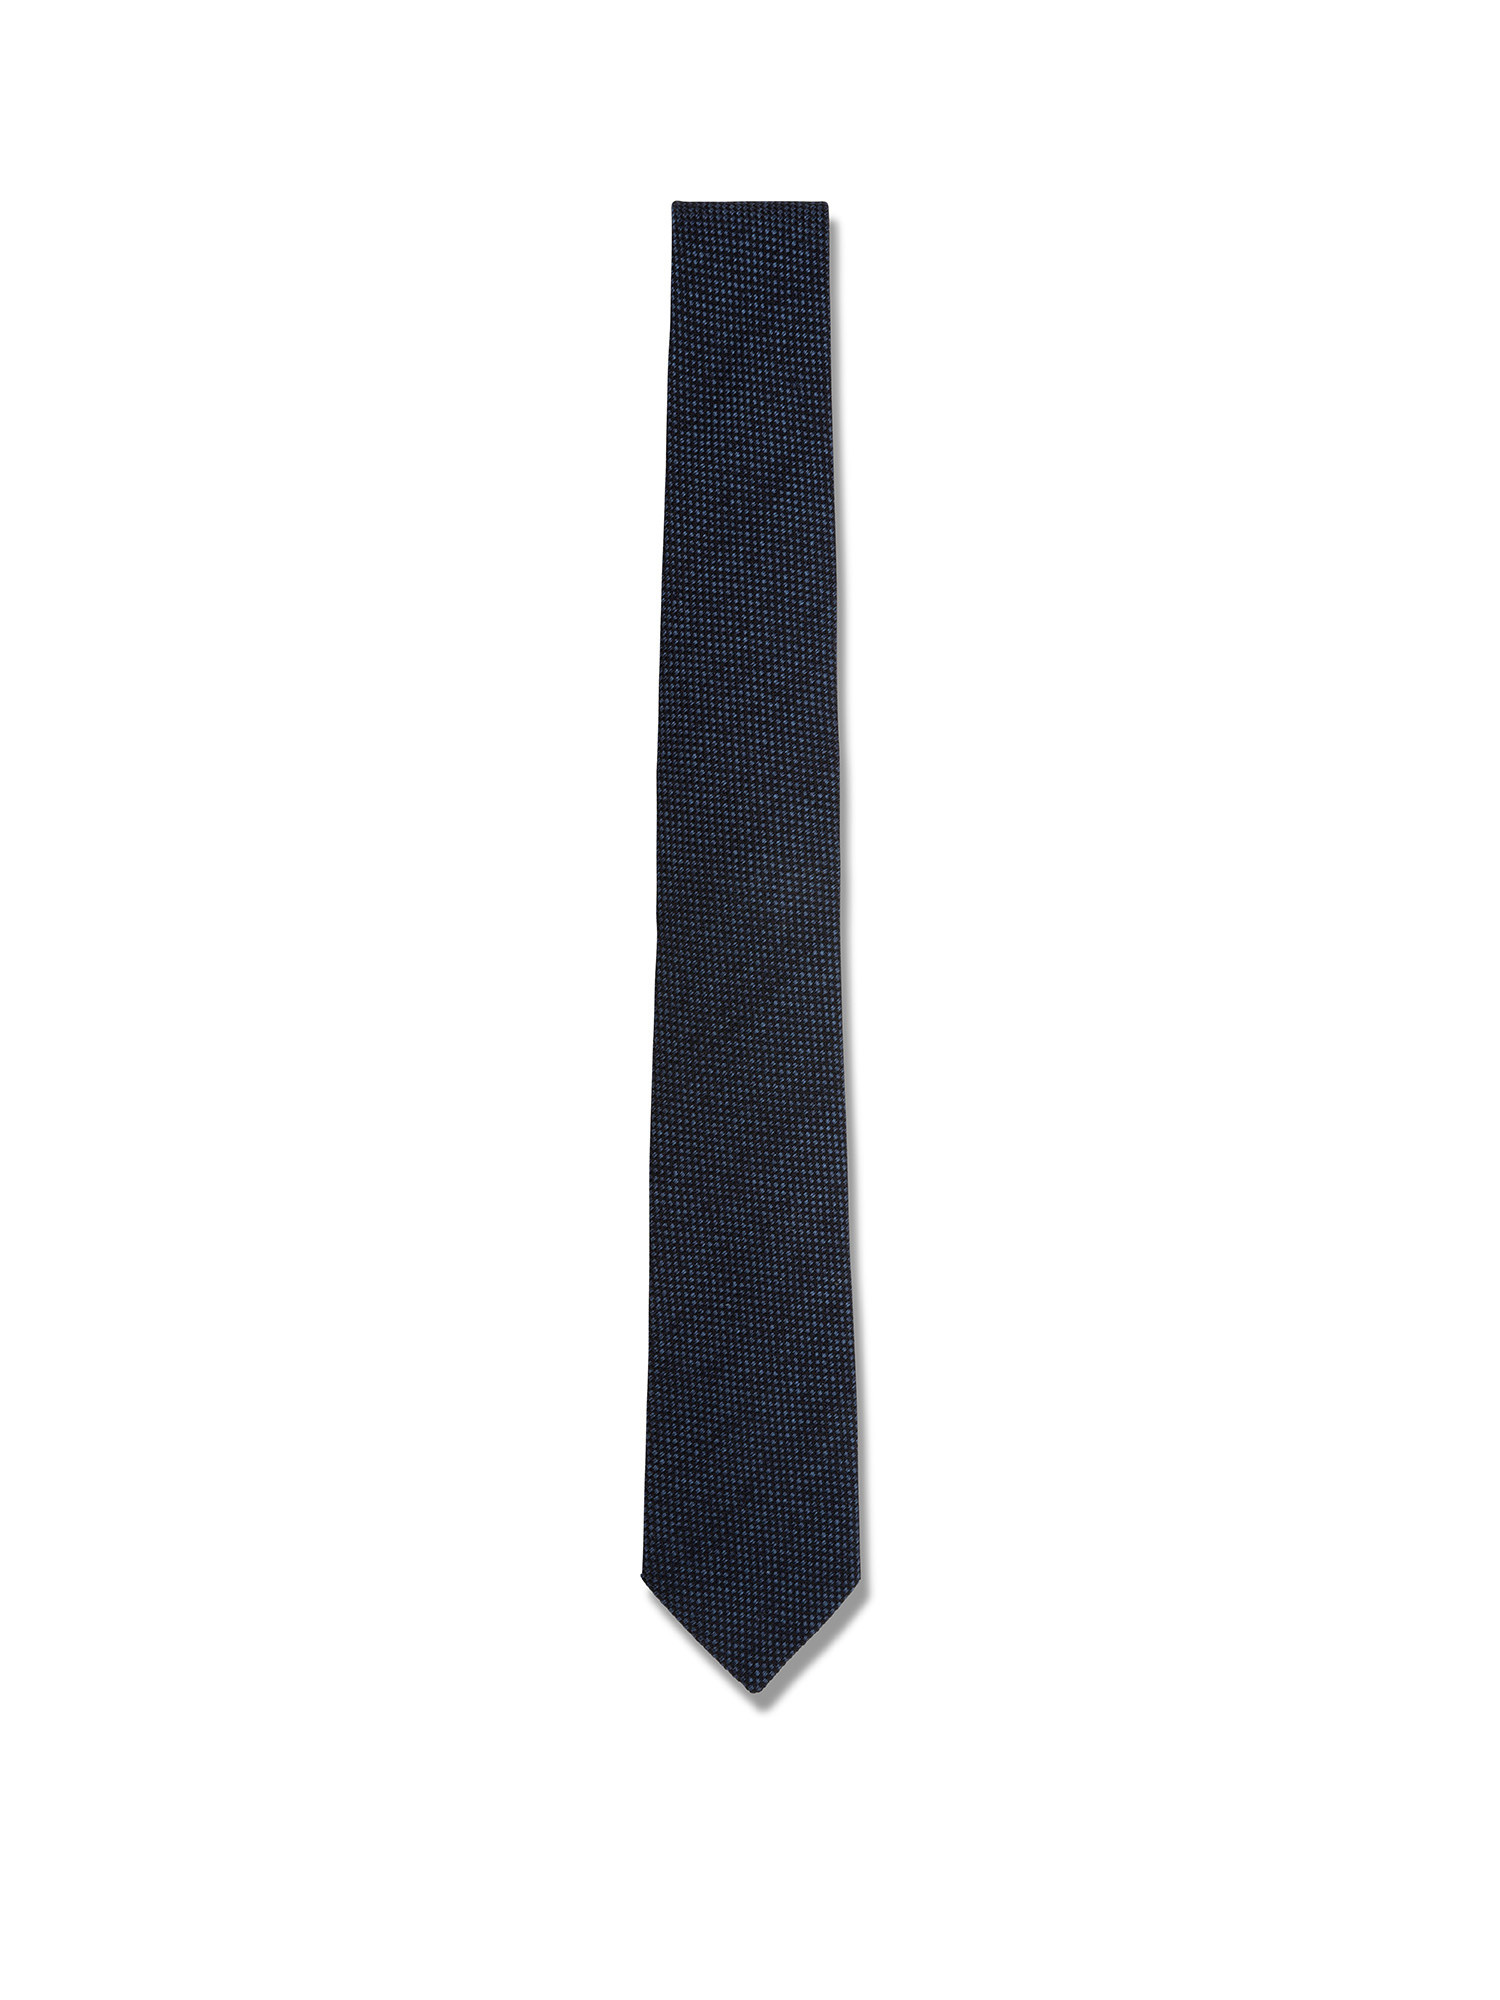 Luca D'Altieri - Classic patterned silk tie, Blue, large image number 1